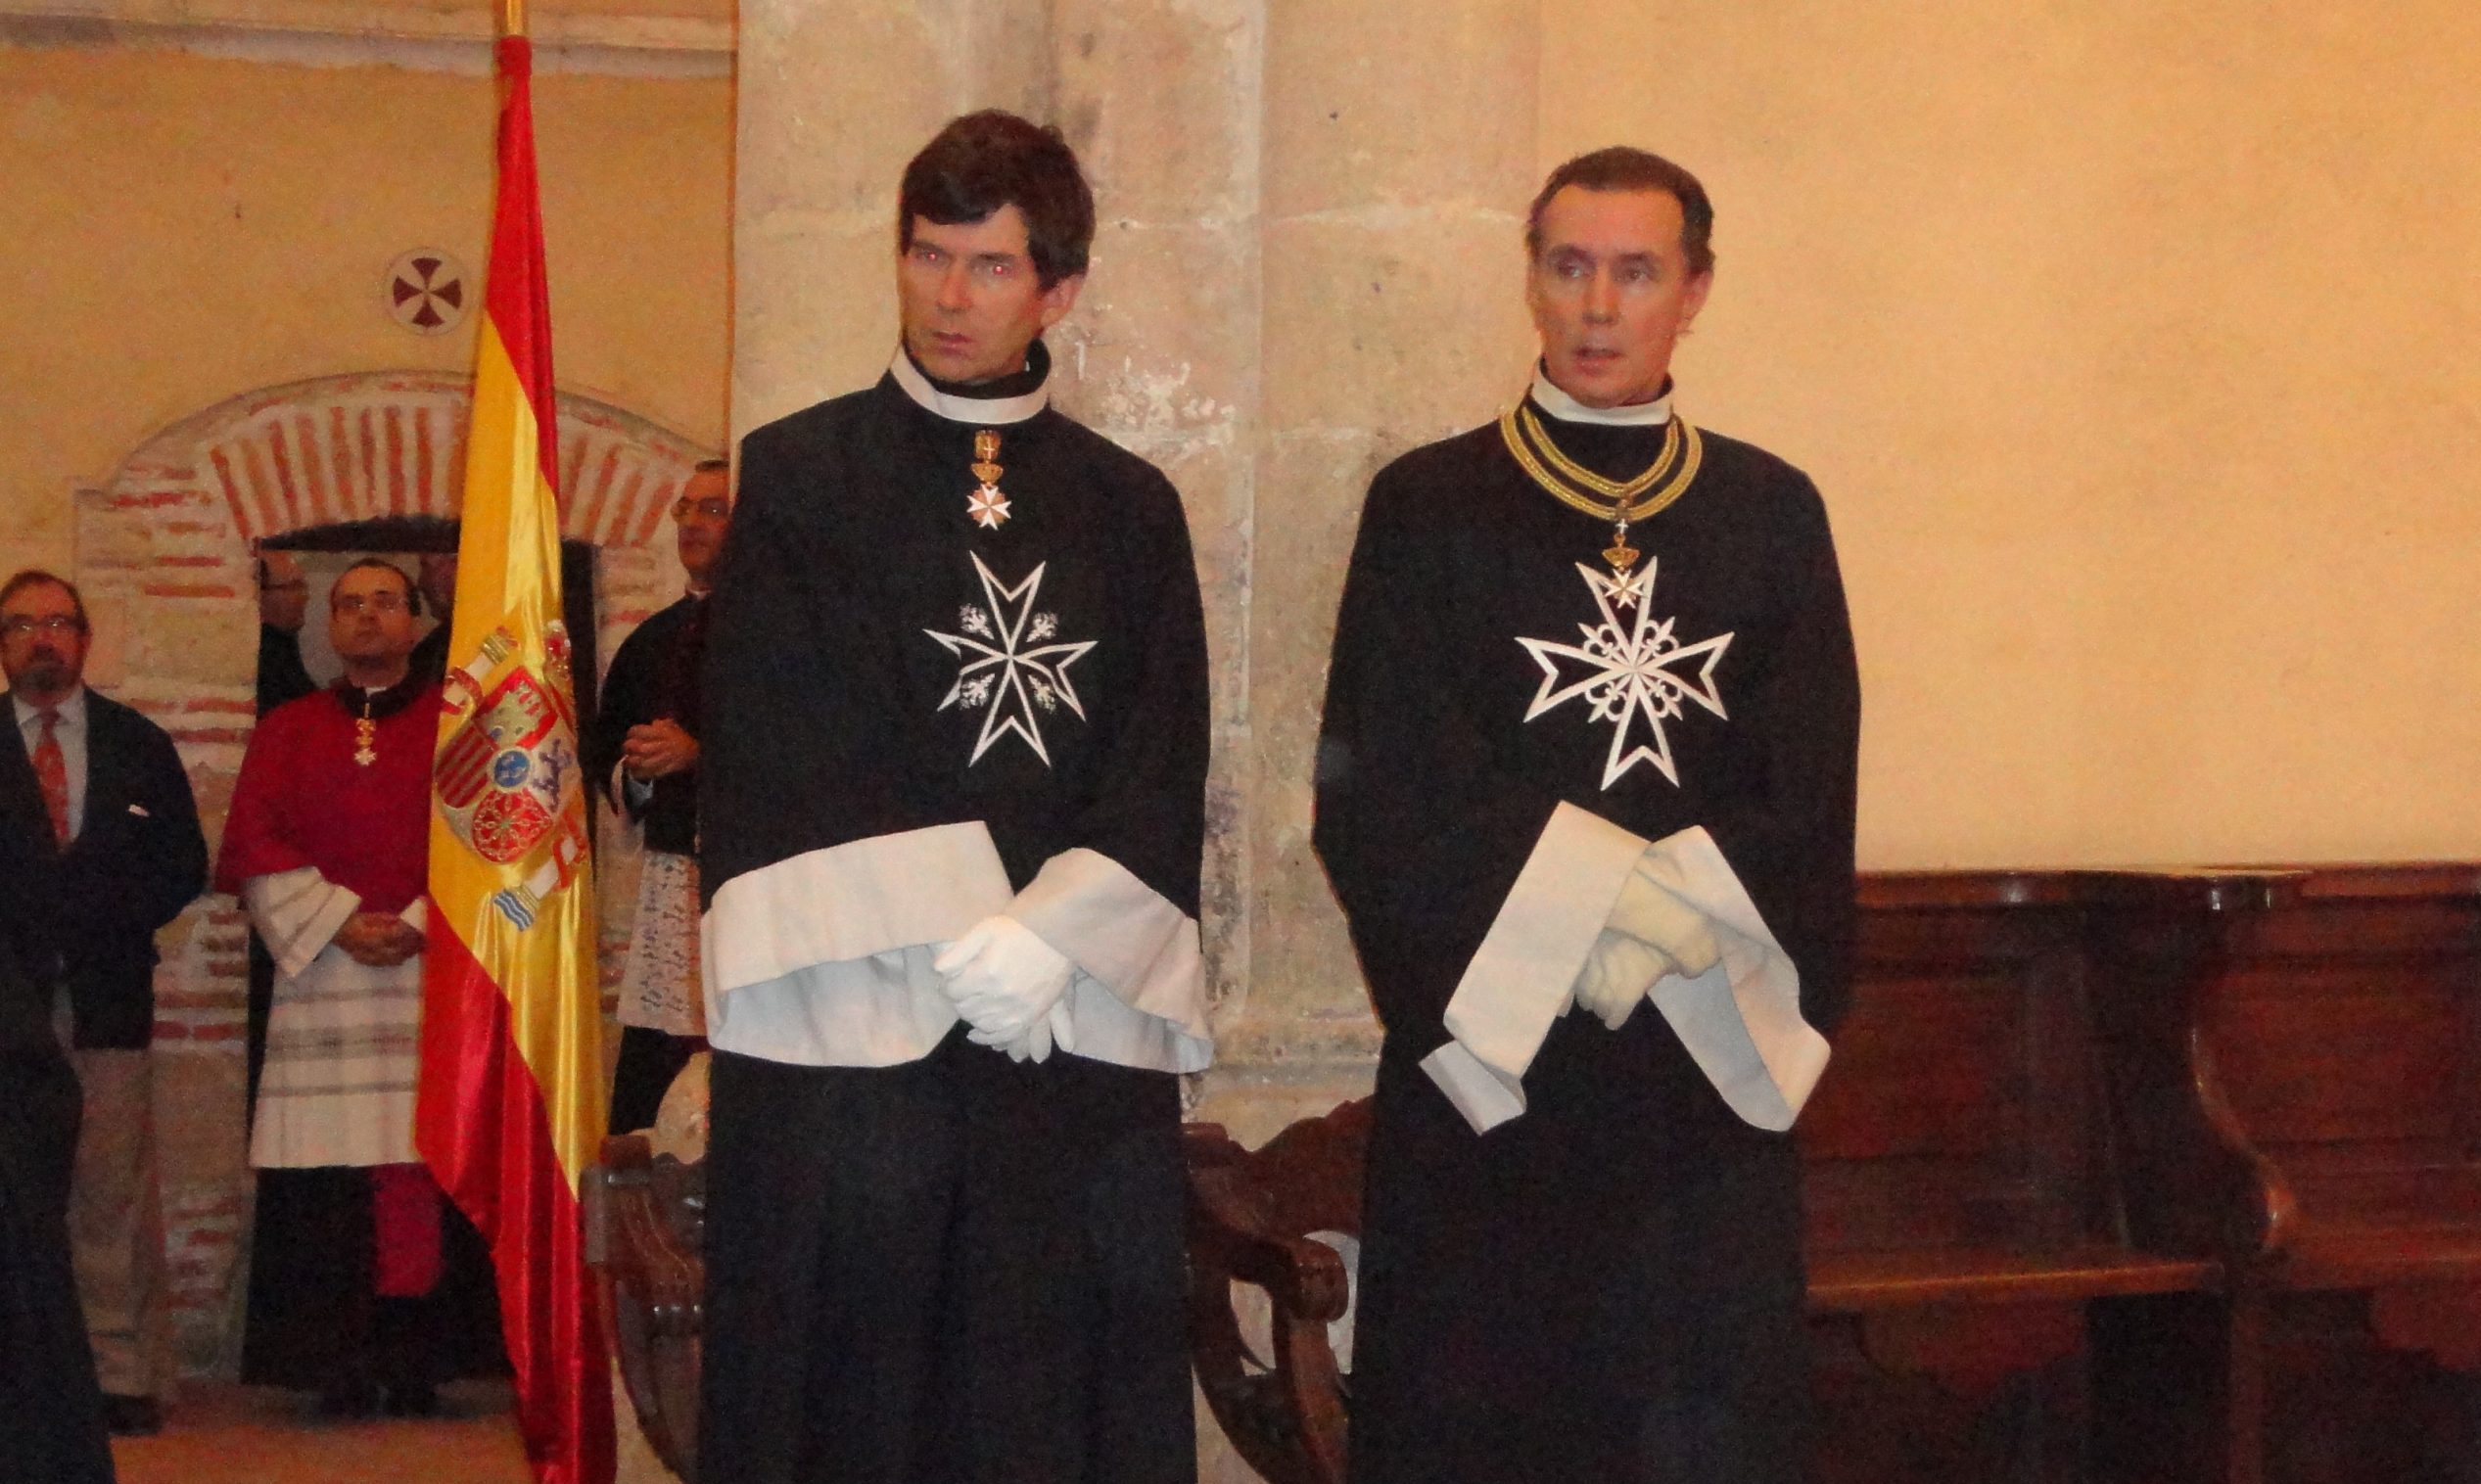 Candlemas Order of Malta